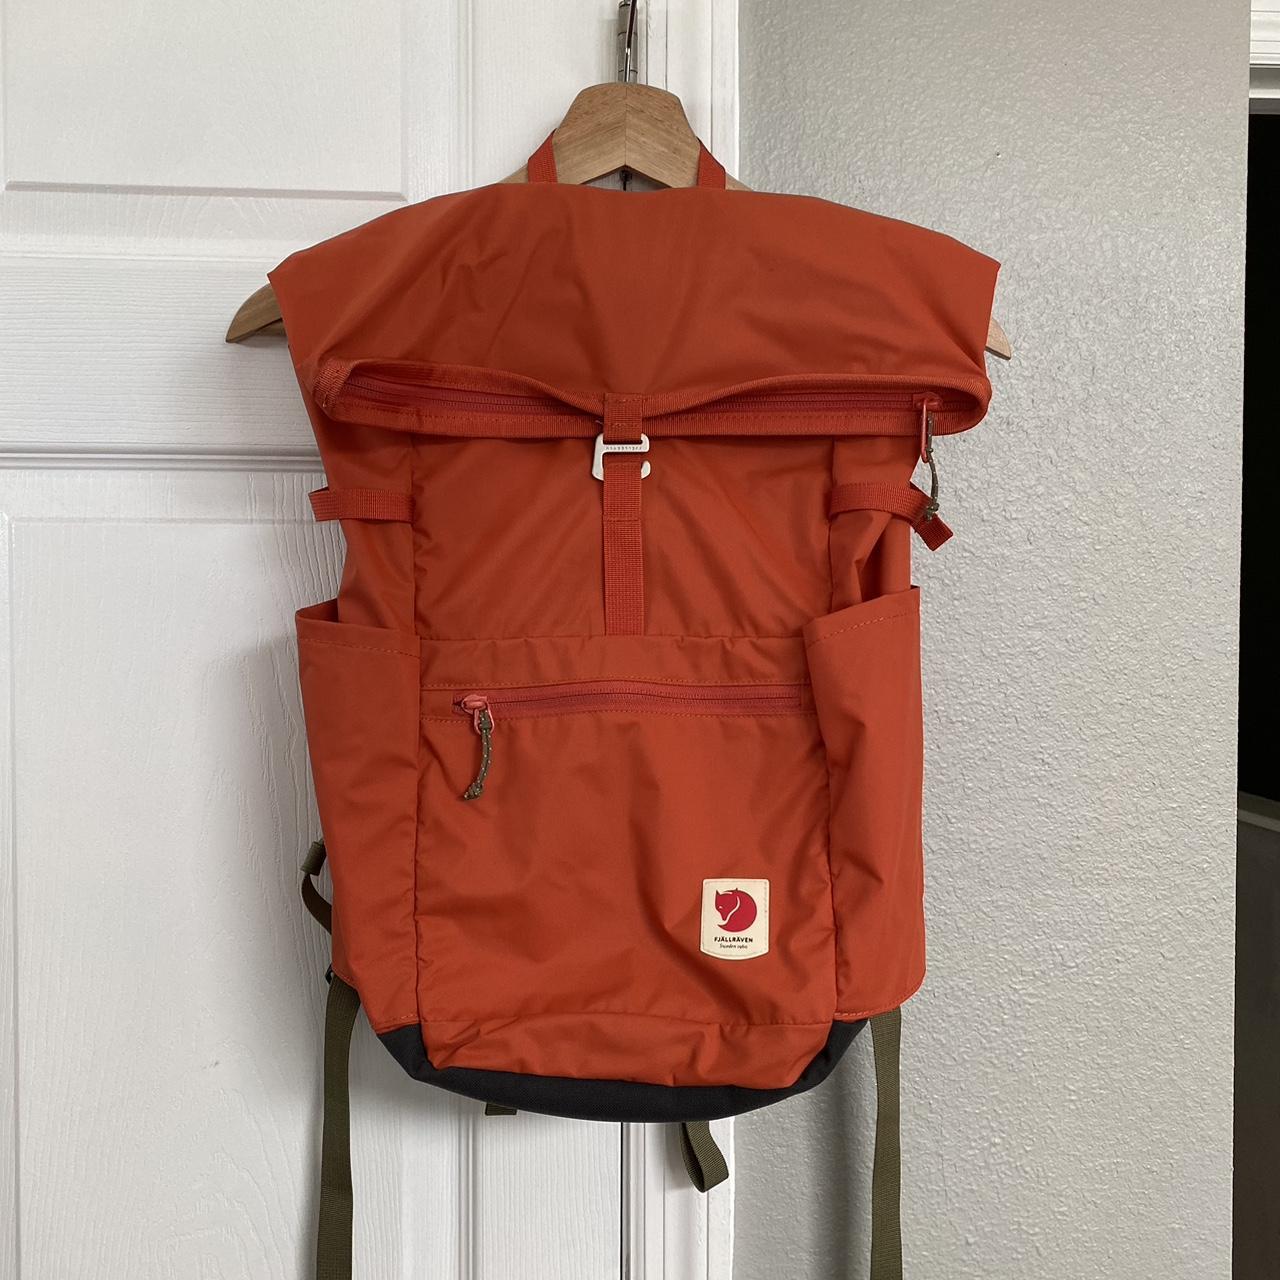 Fjällräven Men's Orange and Red Bag